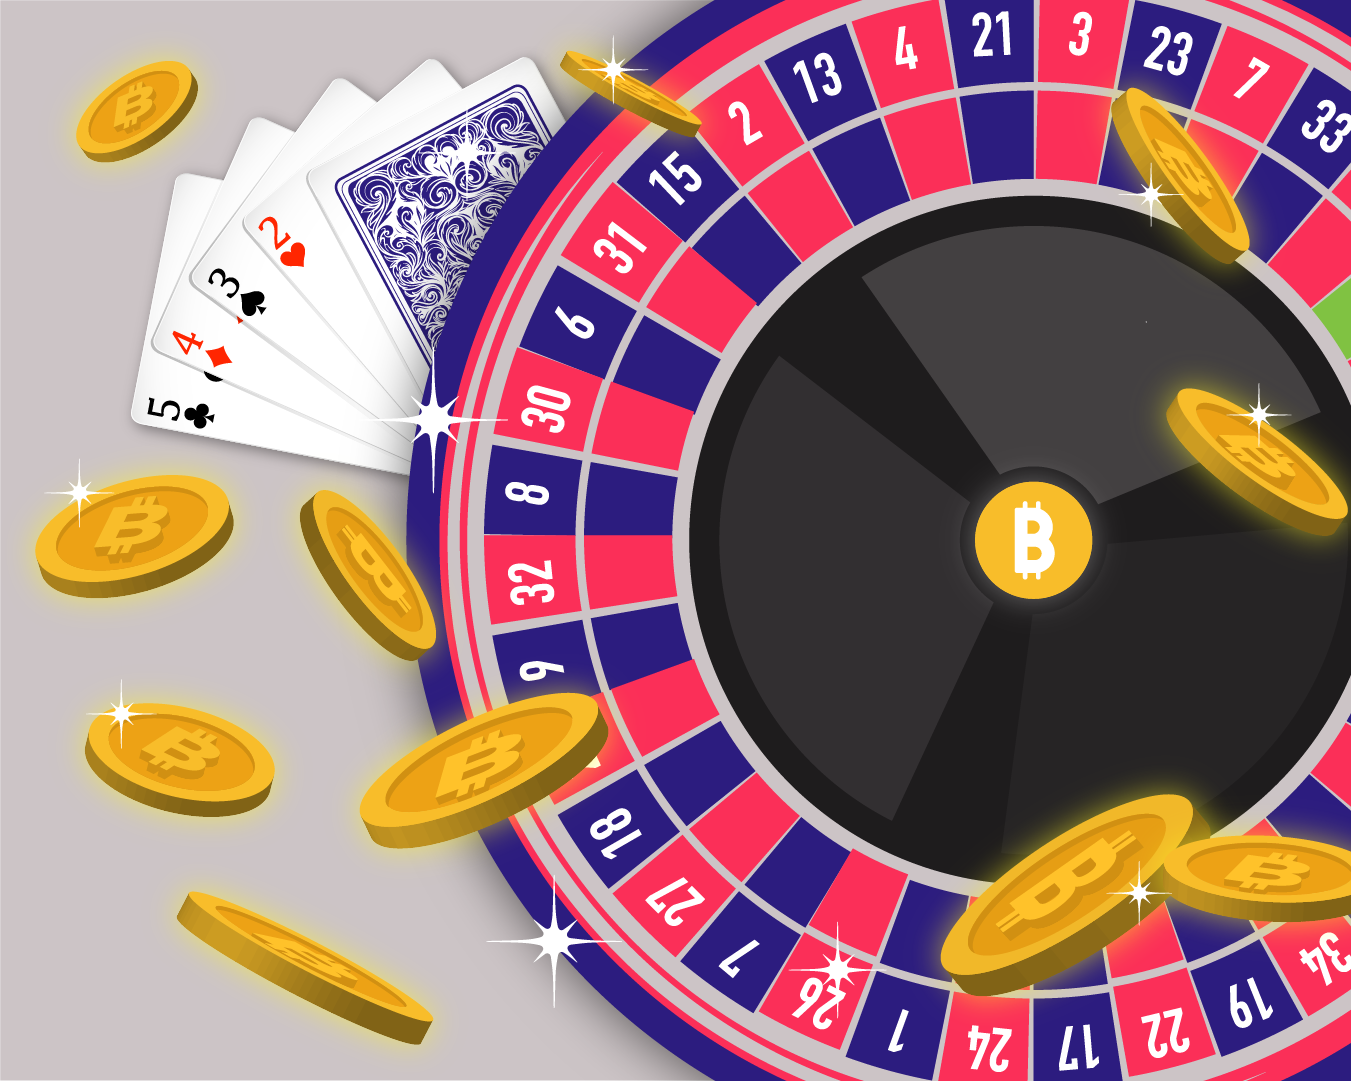 Top 7 Bitcoin Casinos in 2022